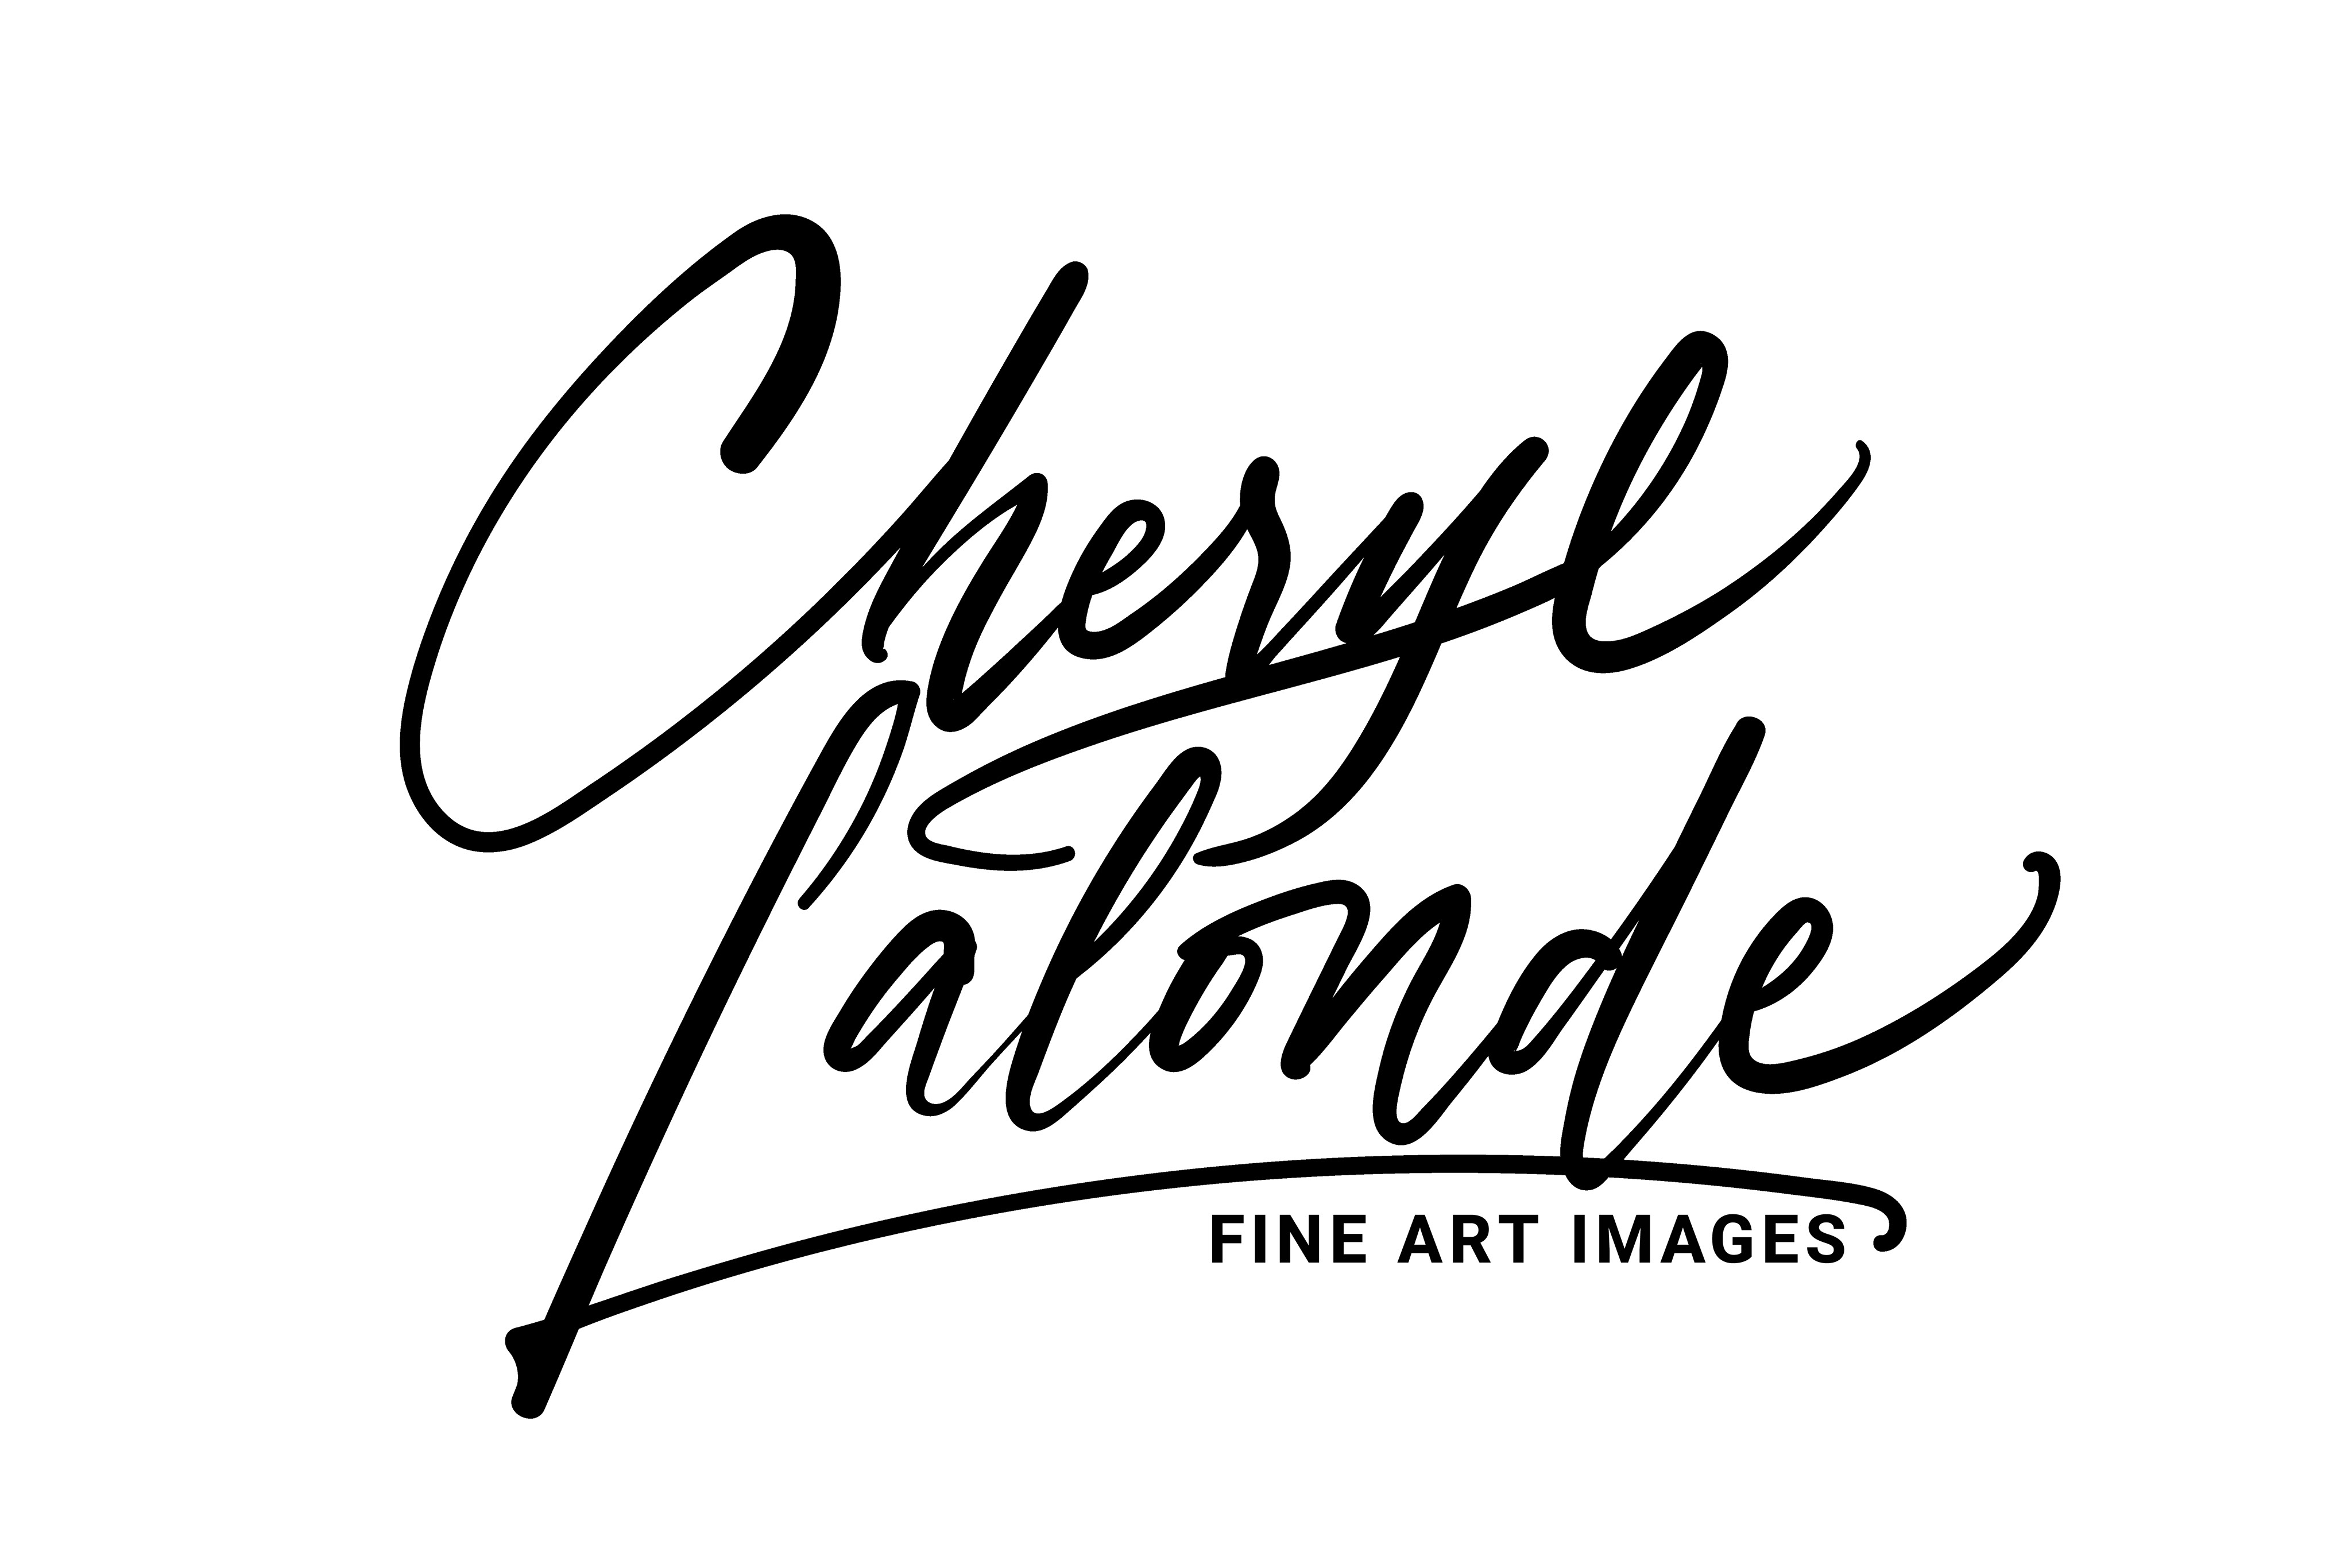 Cheryl Lalonde